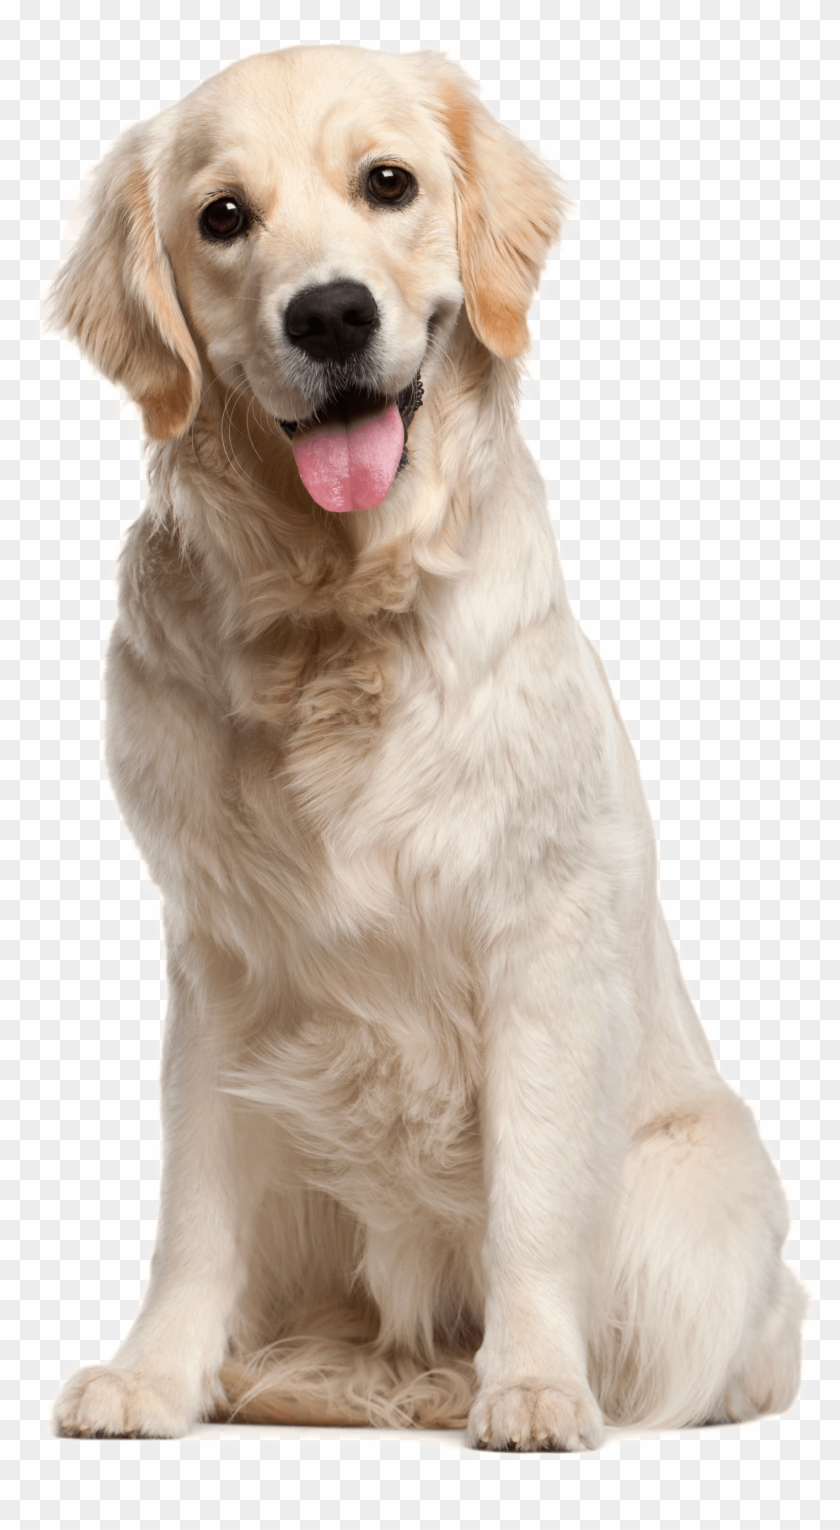 Dog File Png Image - Golden Retriever Clipart #128